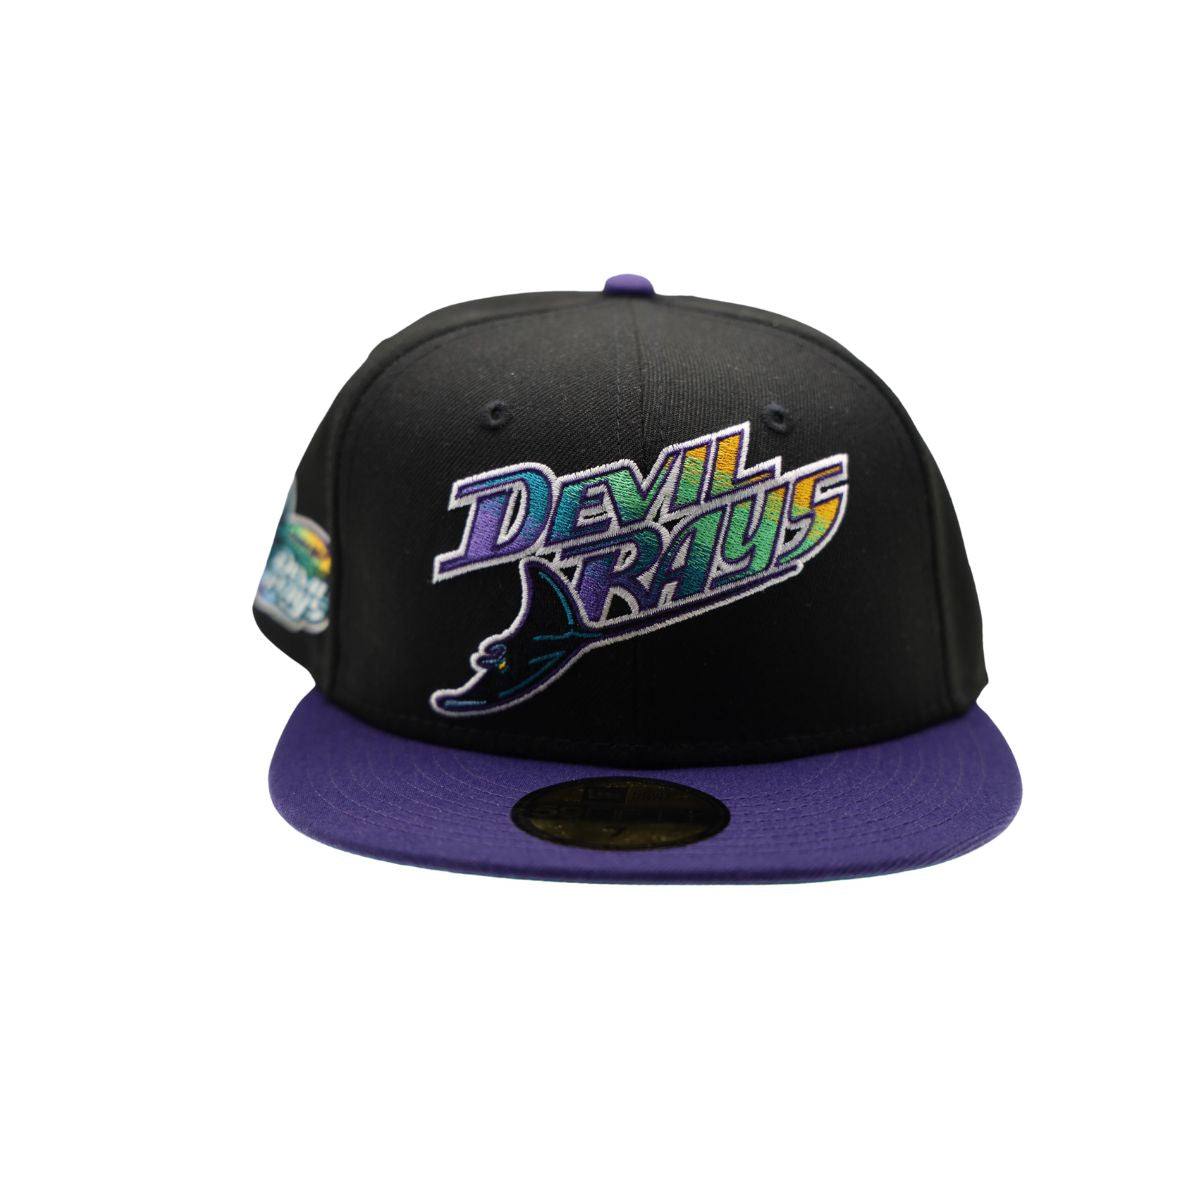 Tampa Bay Rays Baseball Hats for Men | The Bay Republic